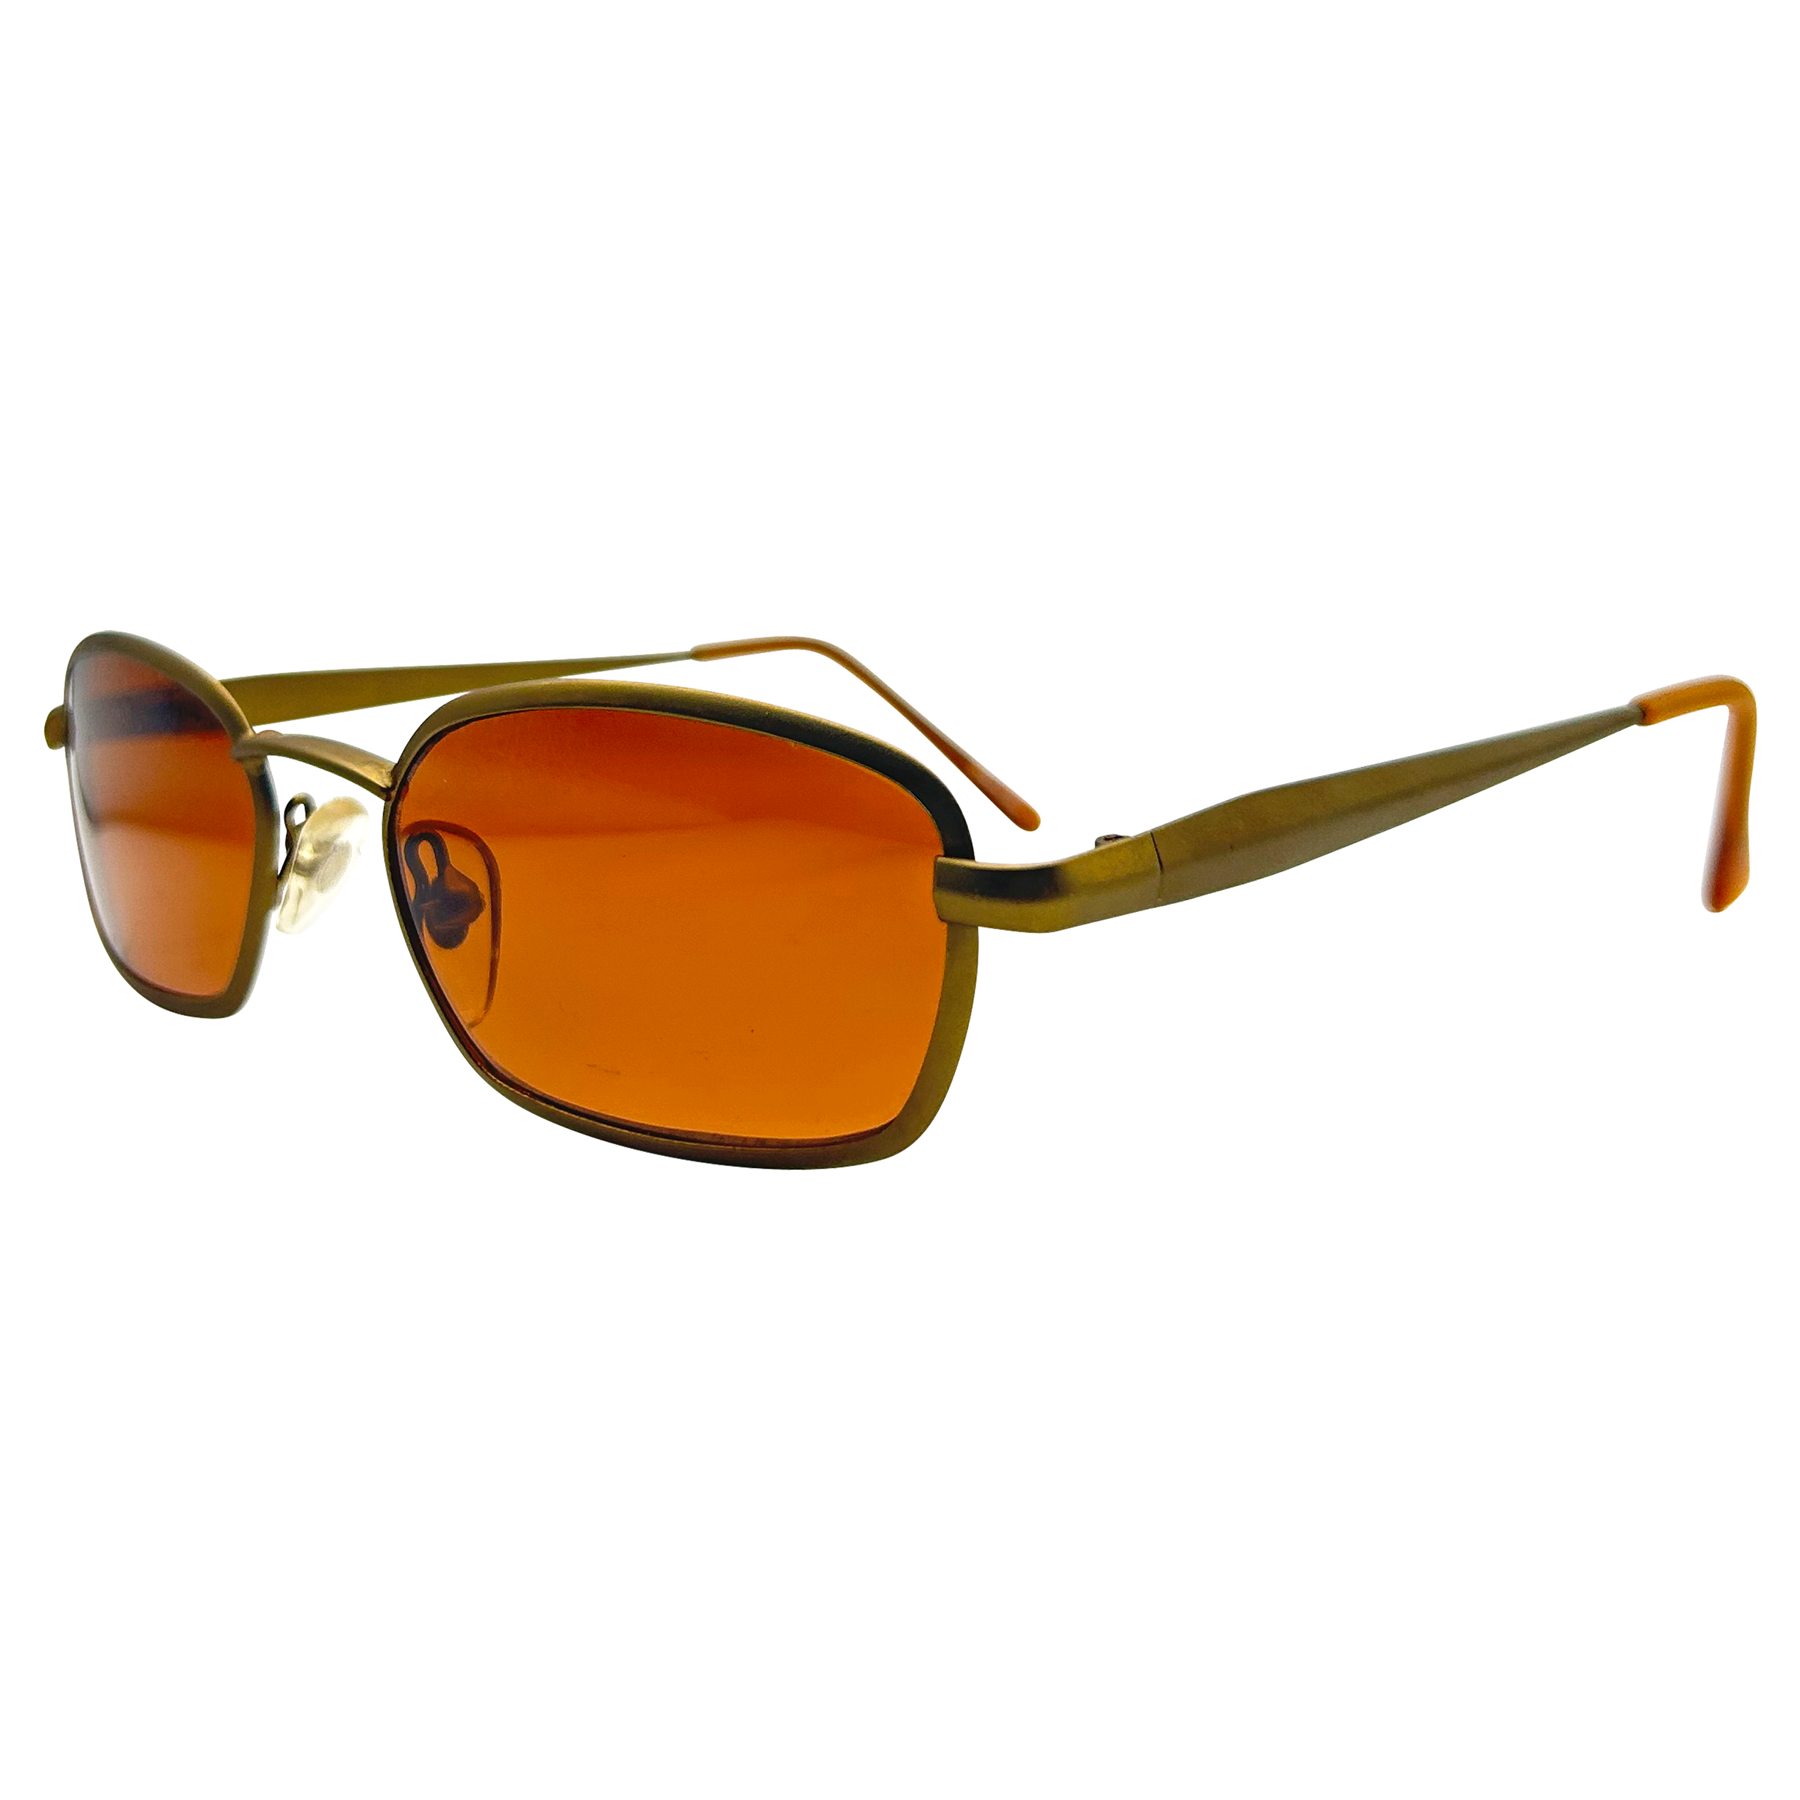 LEFT LANE Square 90s Sunglasses | Blueblockers | Day Driving